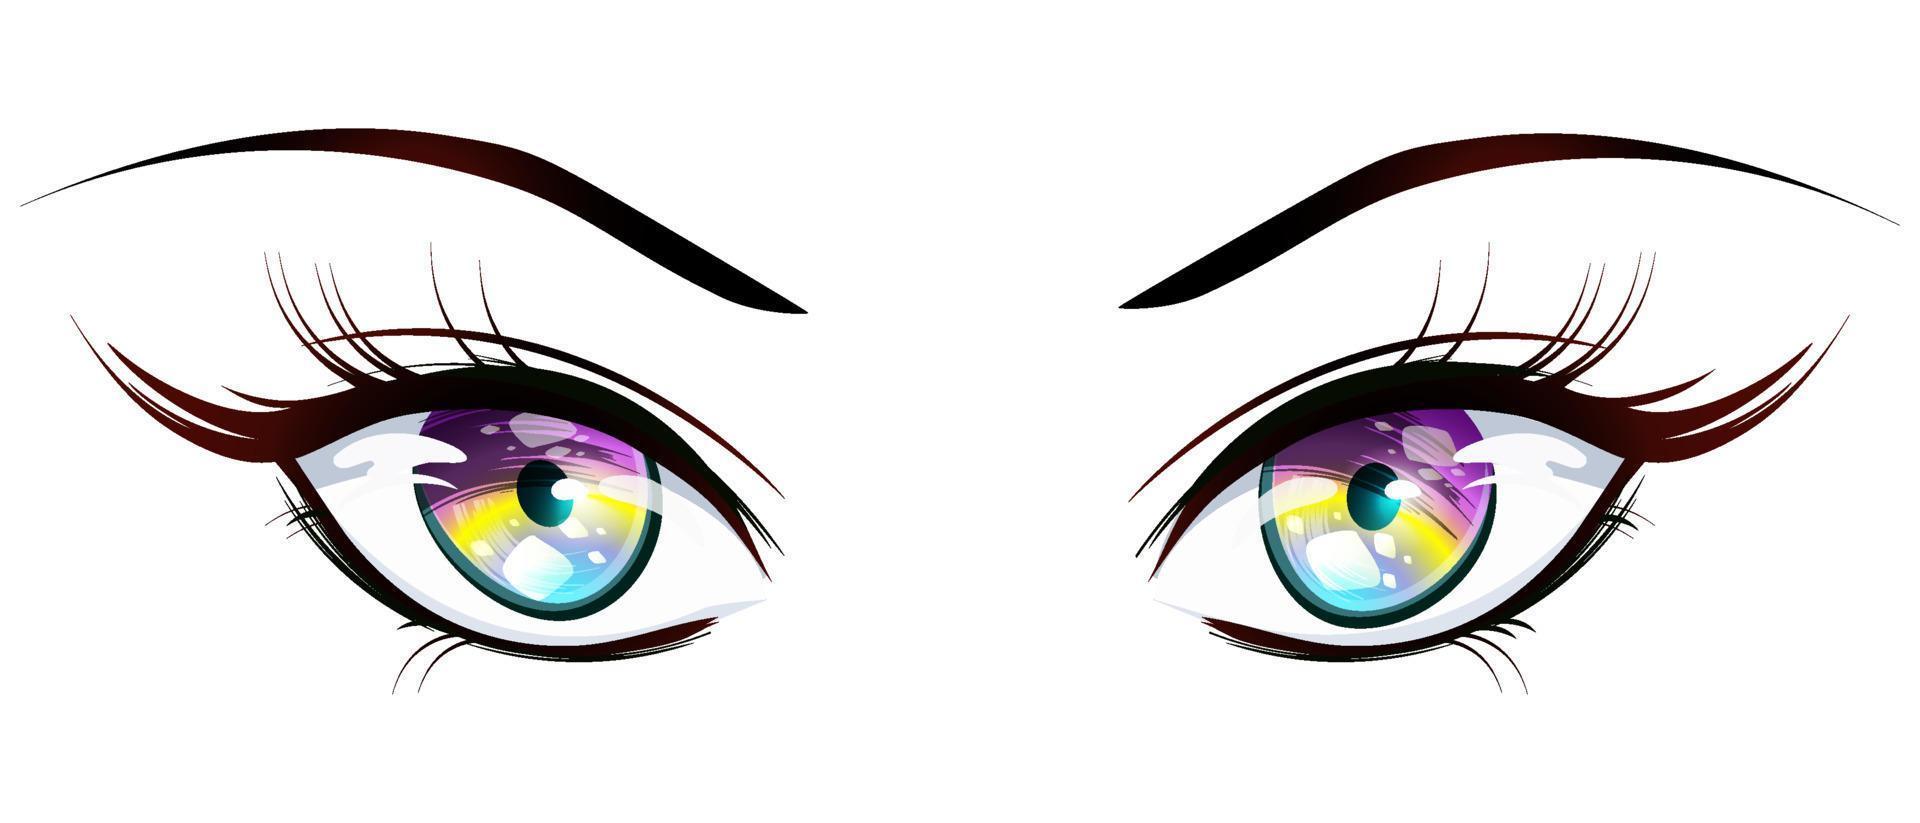 Girl eyes in manga style. vector